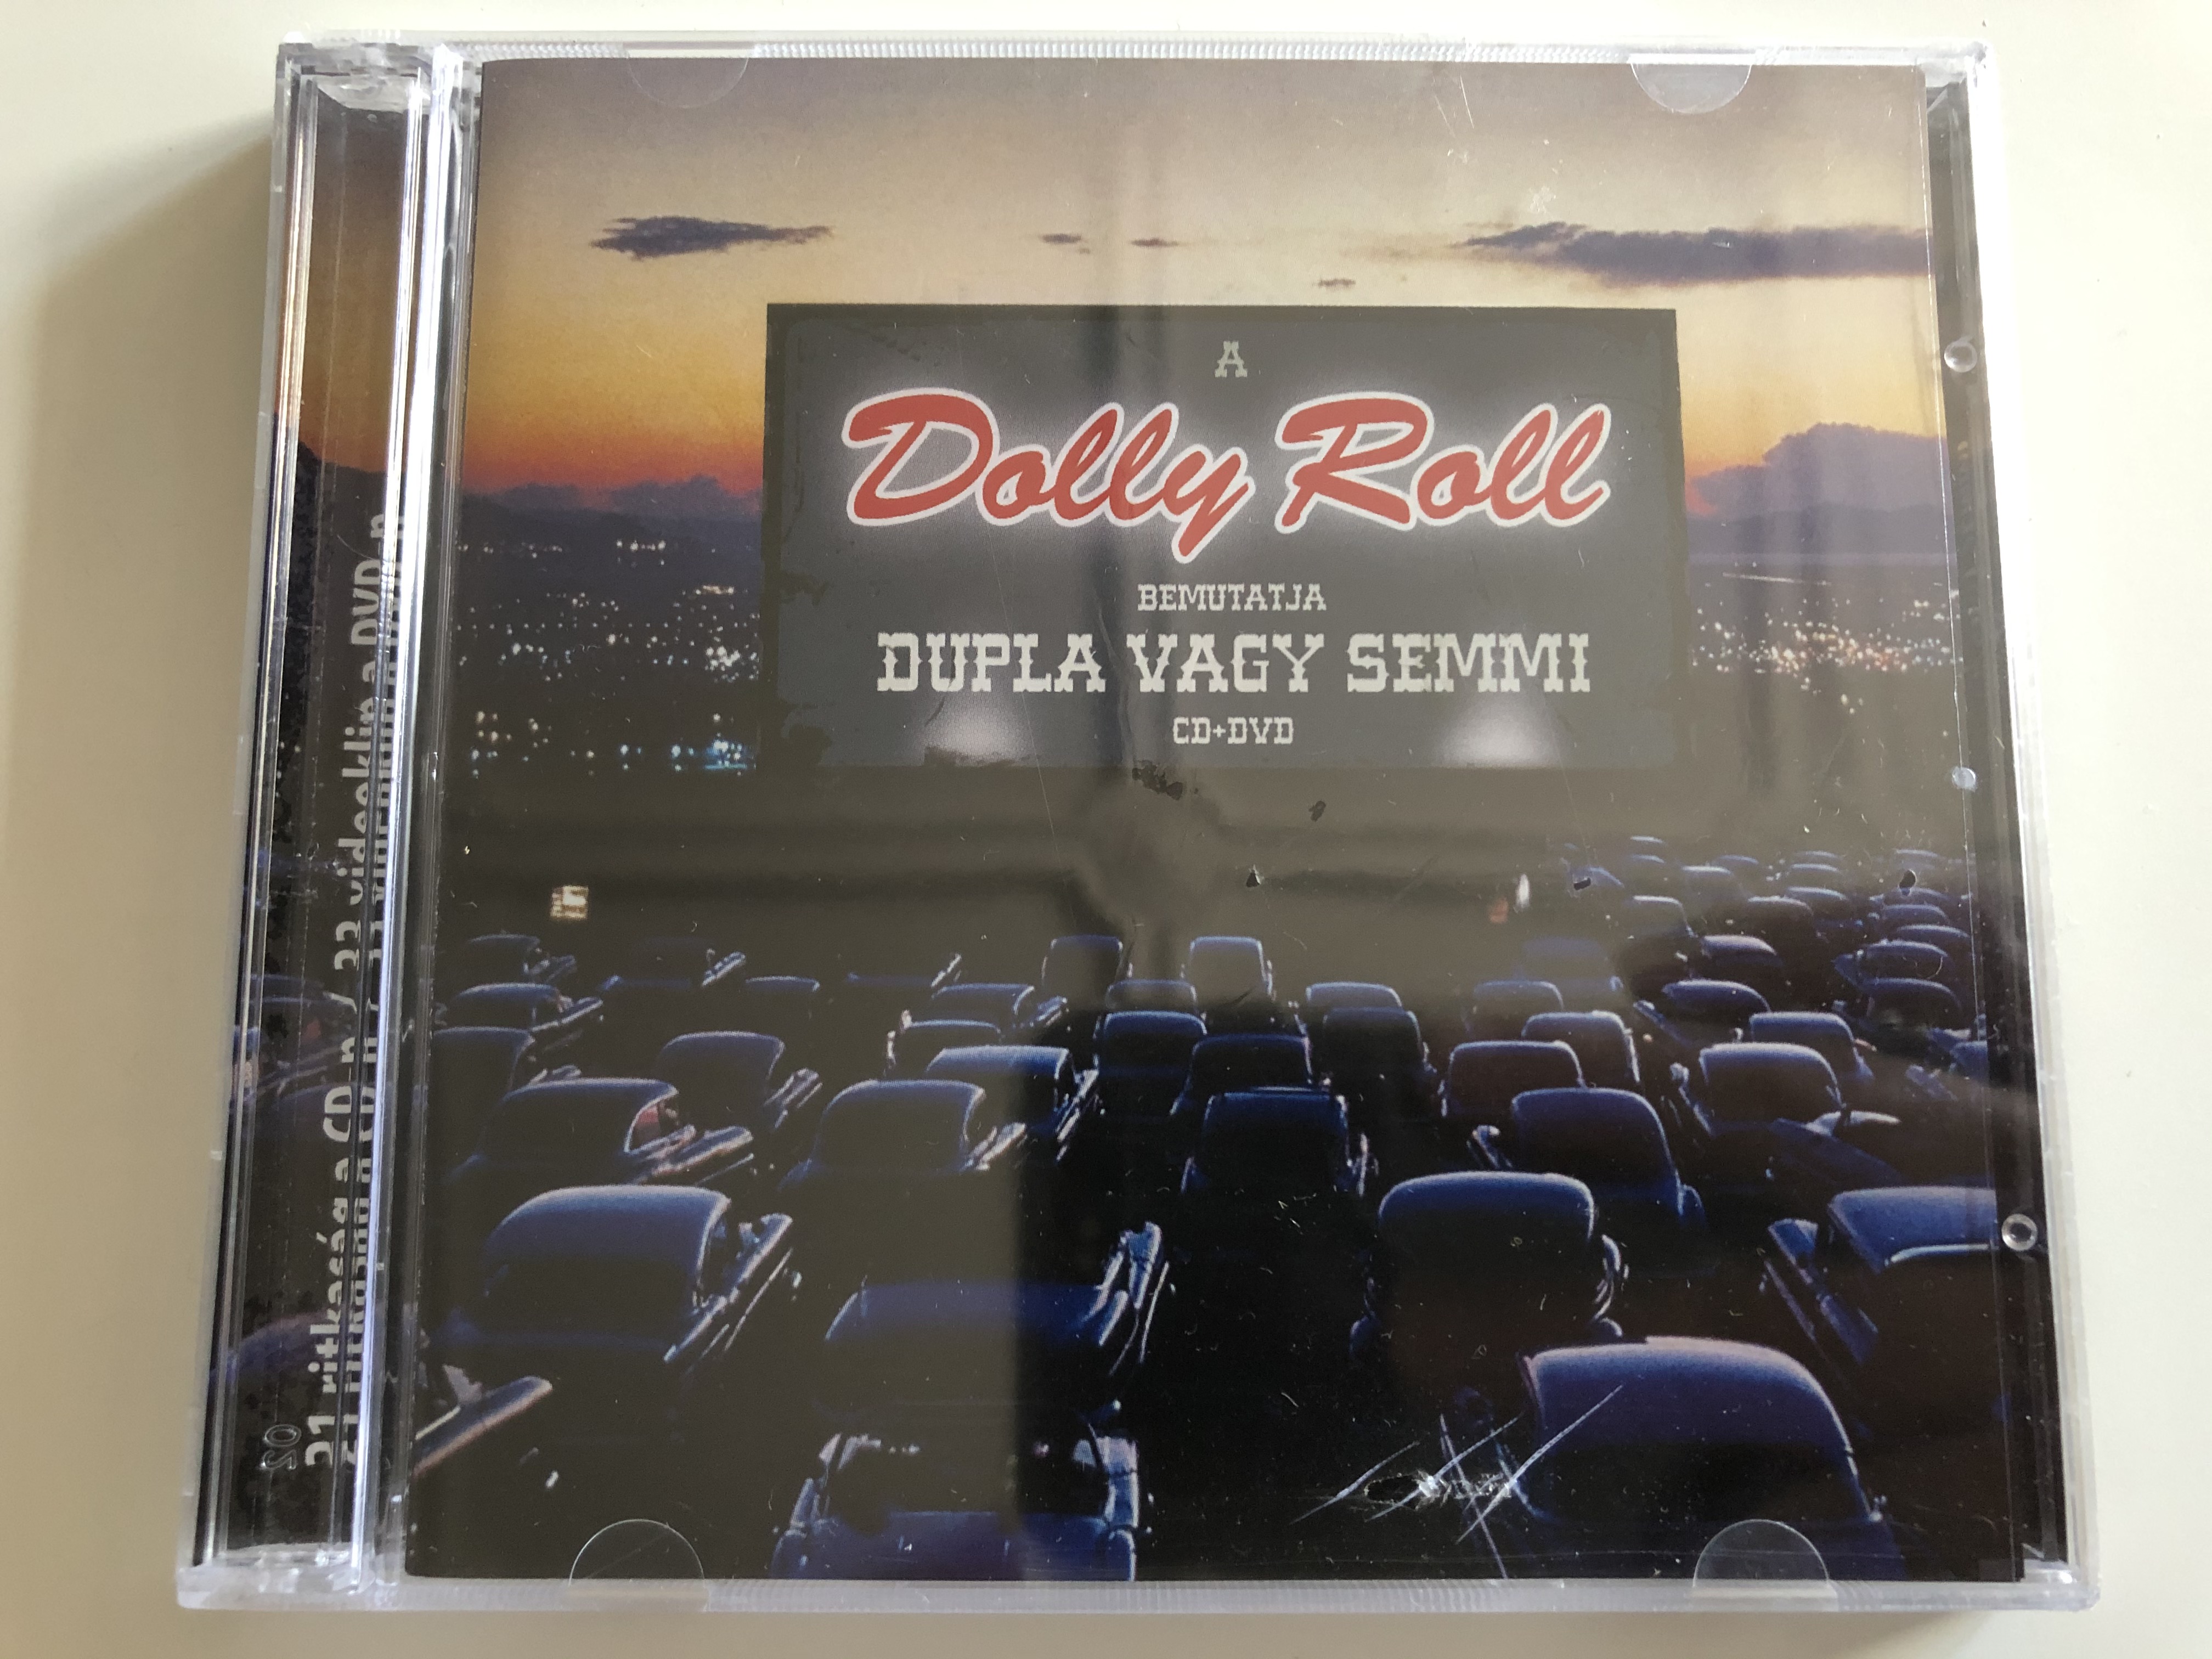 a-dolly-roll-bemutatja-dupla-vagy-semmi-private-stars-productions-audio-cd-dvd-psp1242-1-.jpg